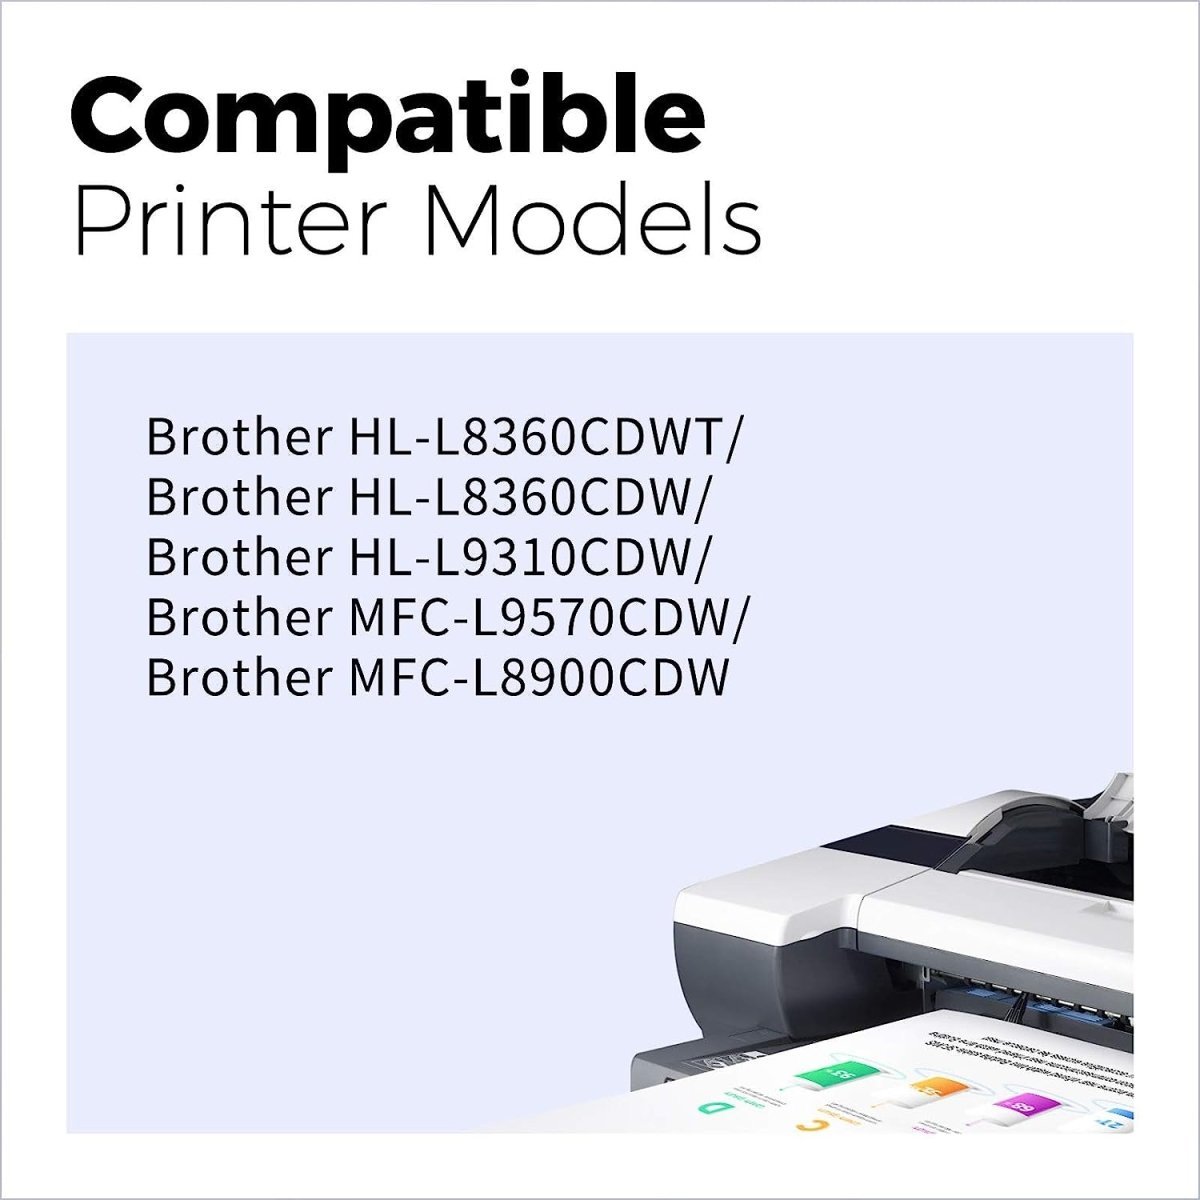 Compatible Brother TN436 Toner Cartridge (Black/Cyan/Magenta/Yellow, 4 Pack) - Linford Office:Printer Ink & Toner Cartridge